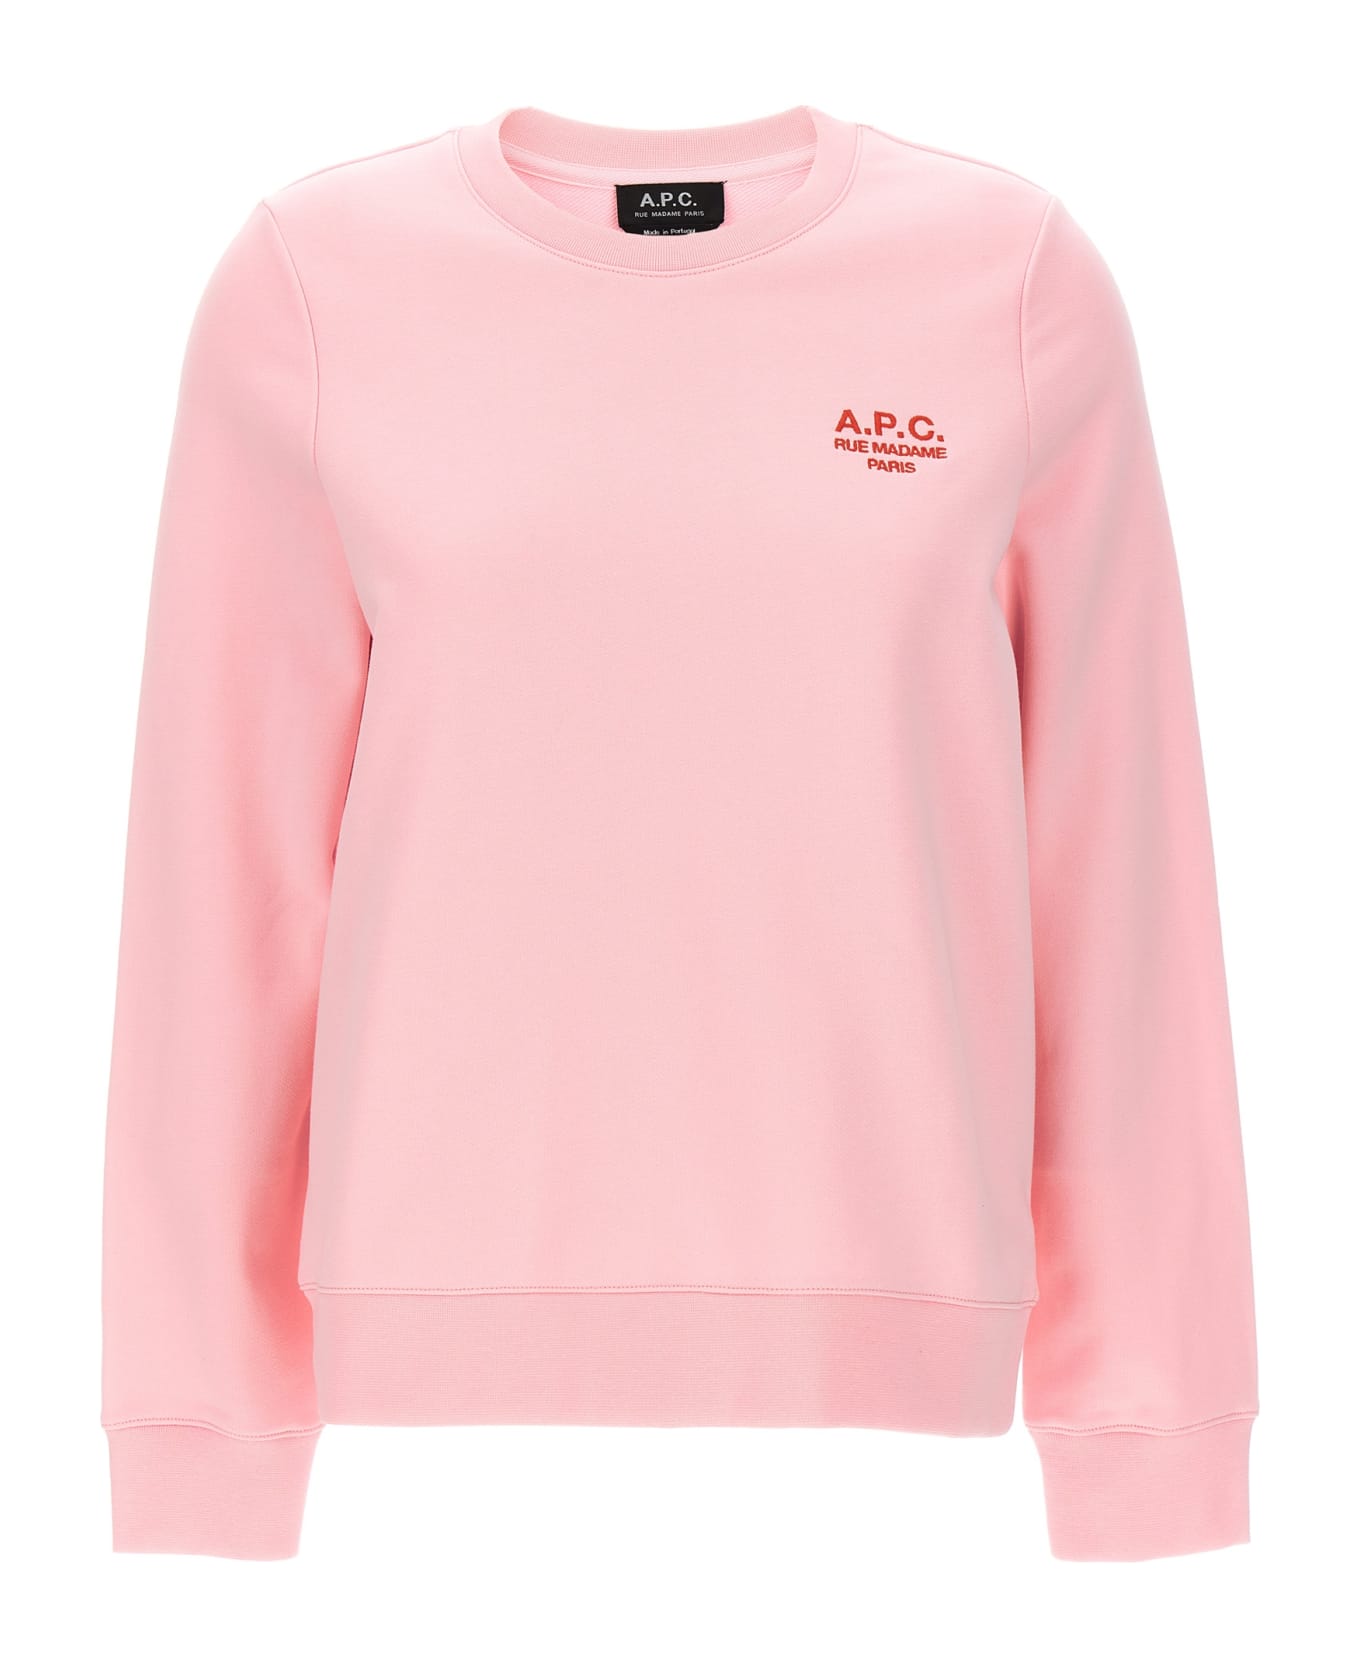 A.P.C. Skye Sweatshirt - Pink